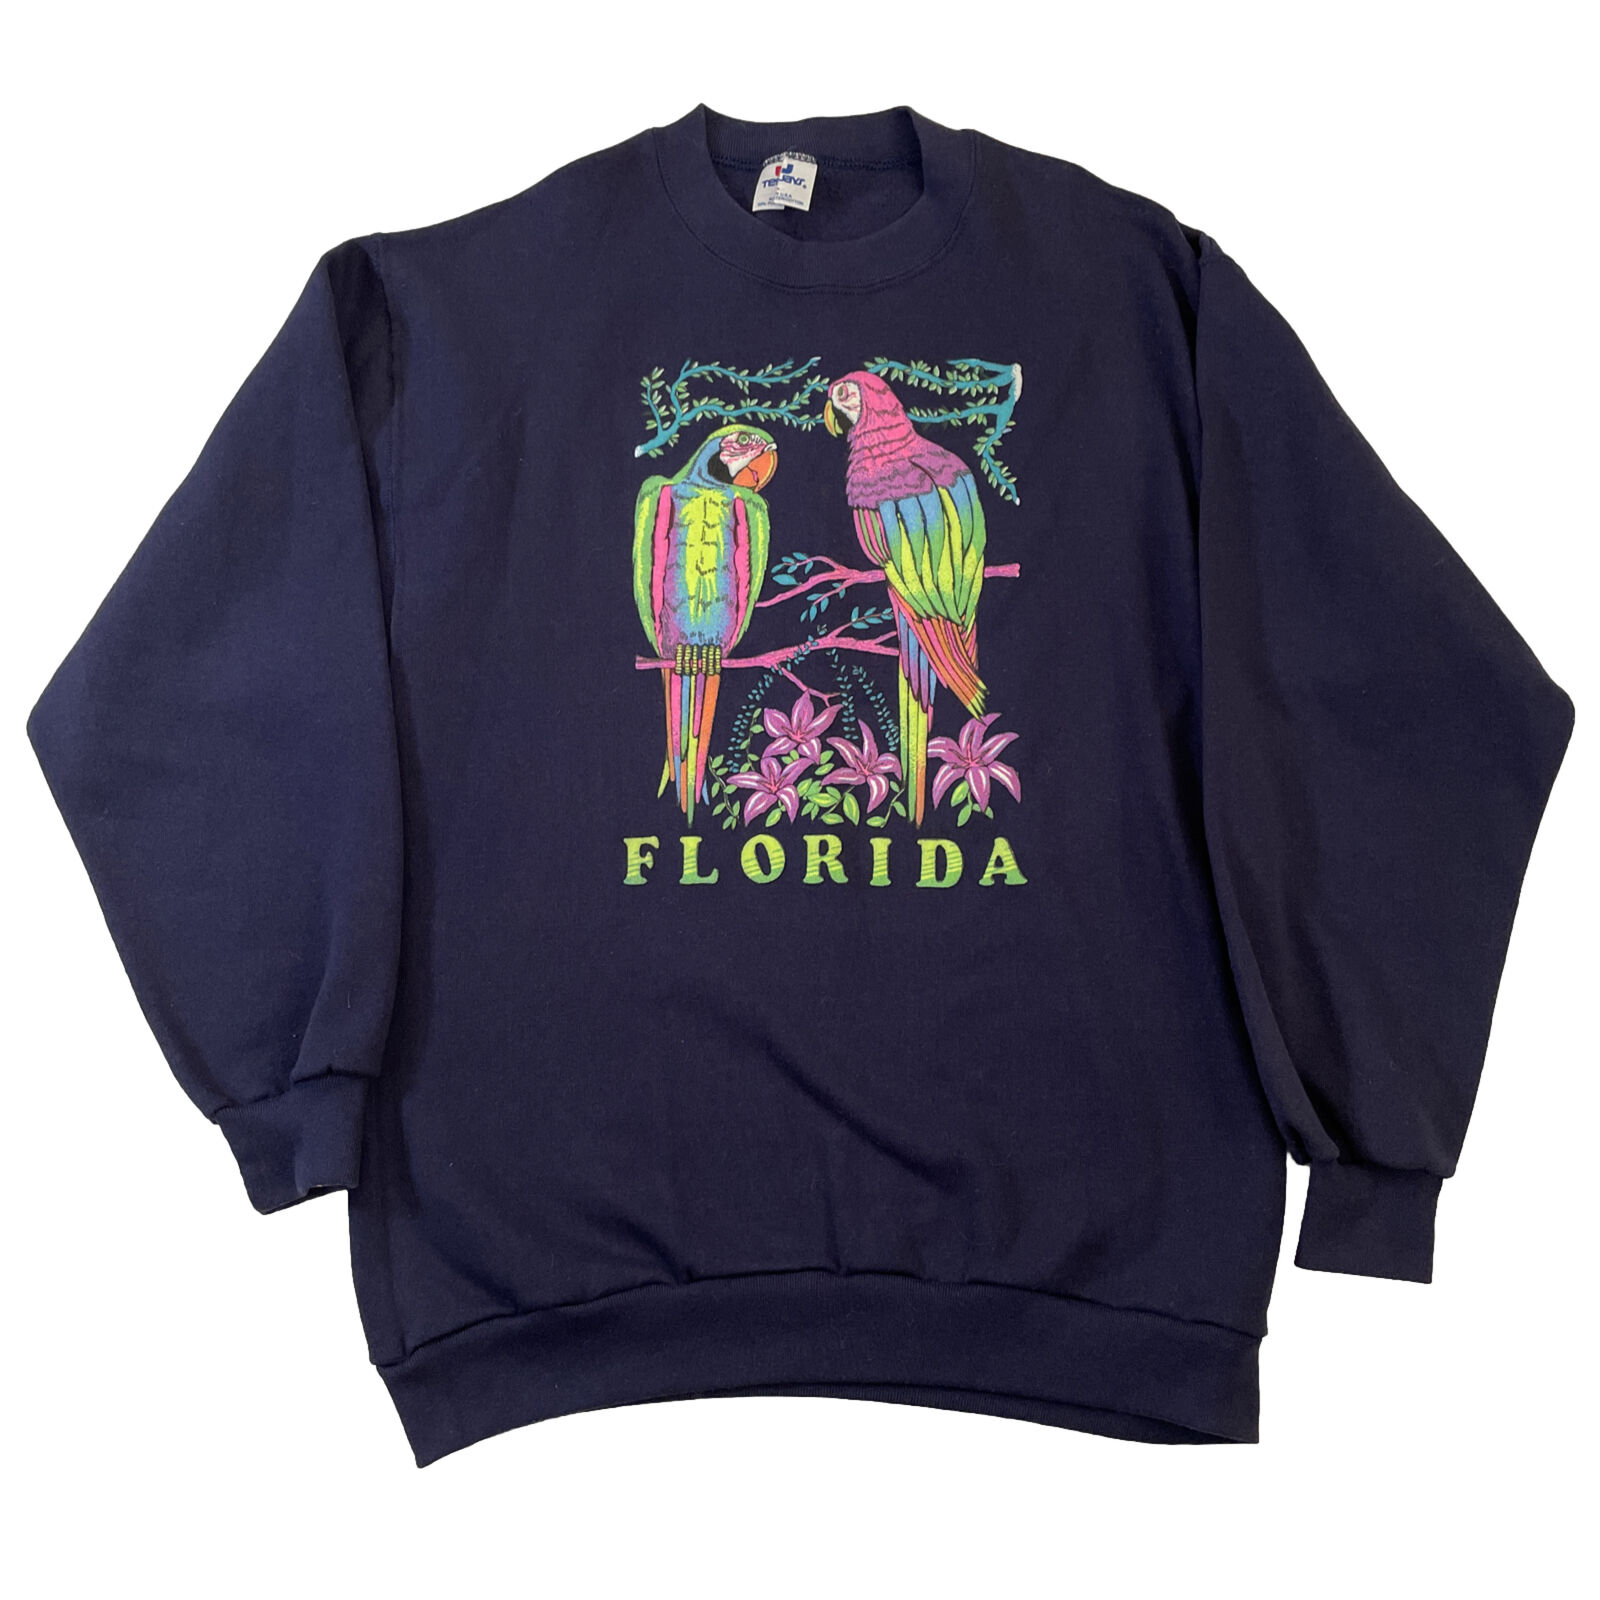 VTG 80s Parrots Birds Flowers Florida Sweater Sweatshirt Sz L Neon Puff Print